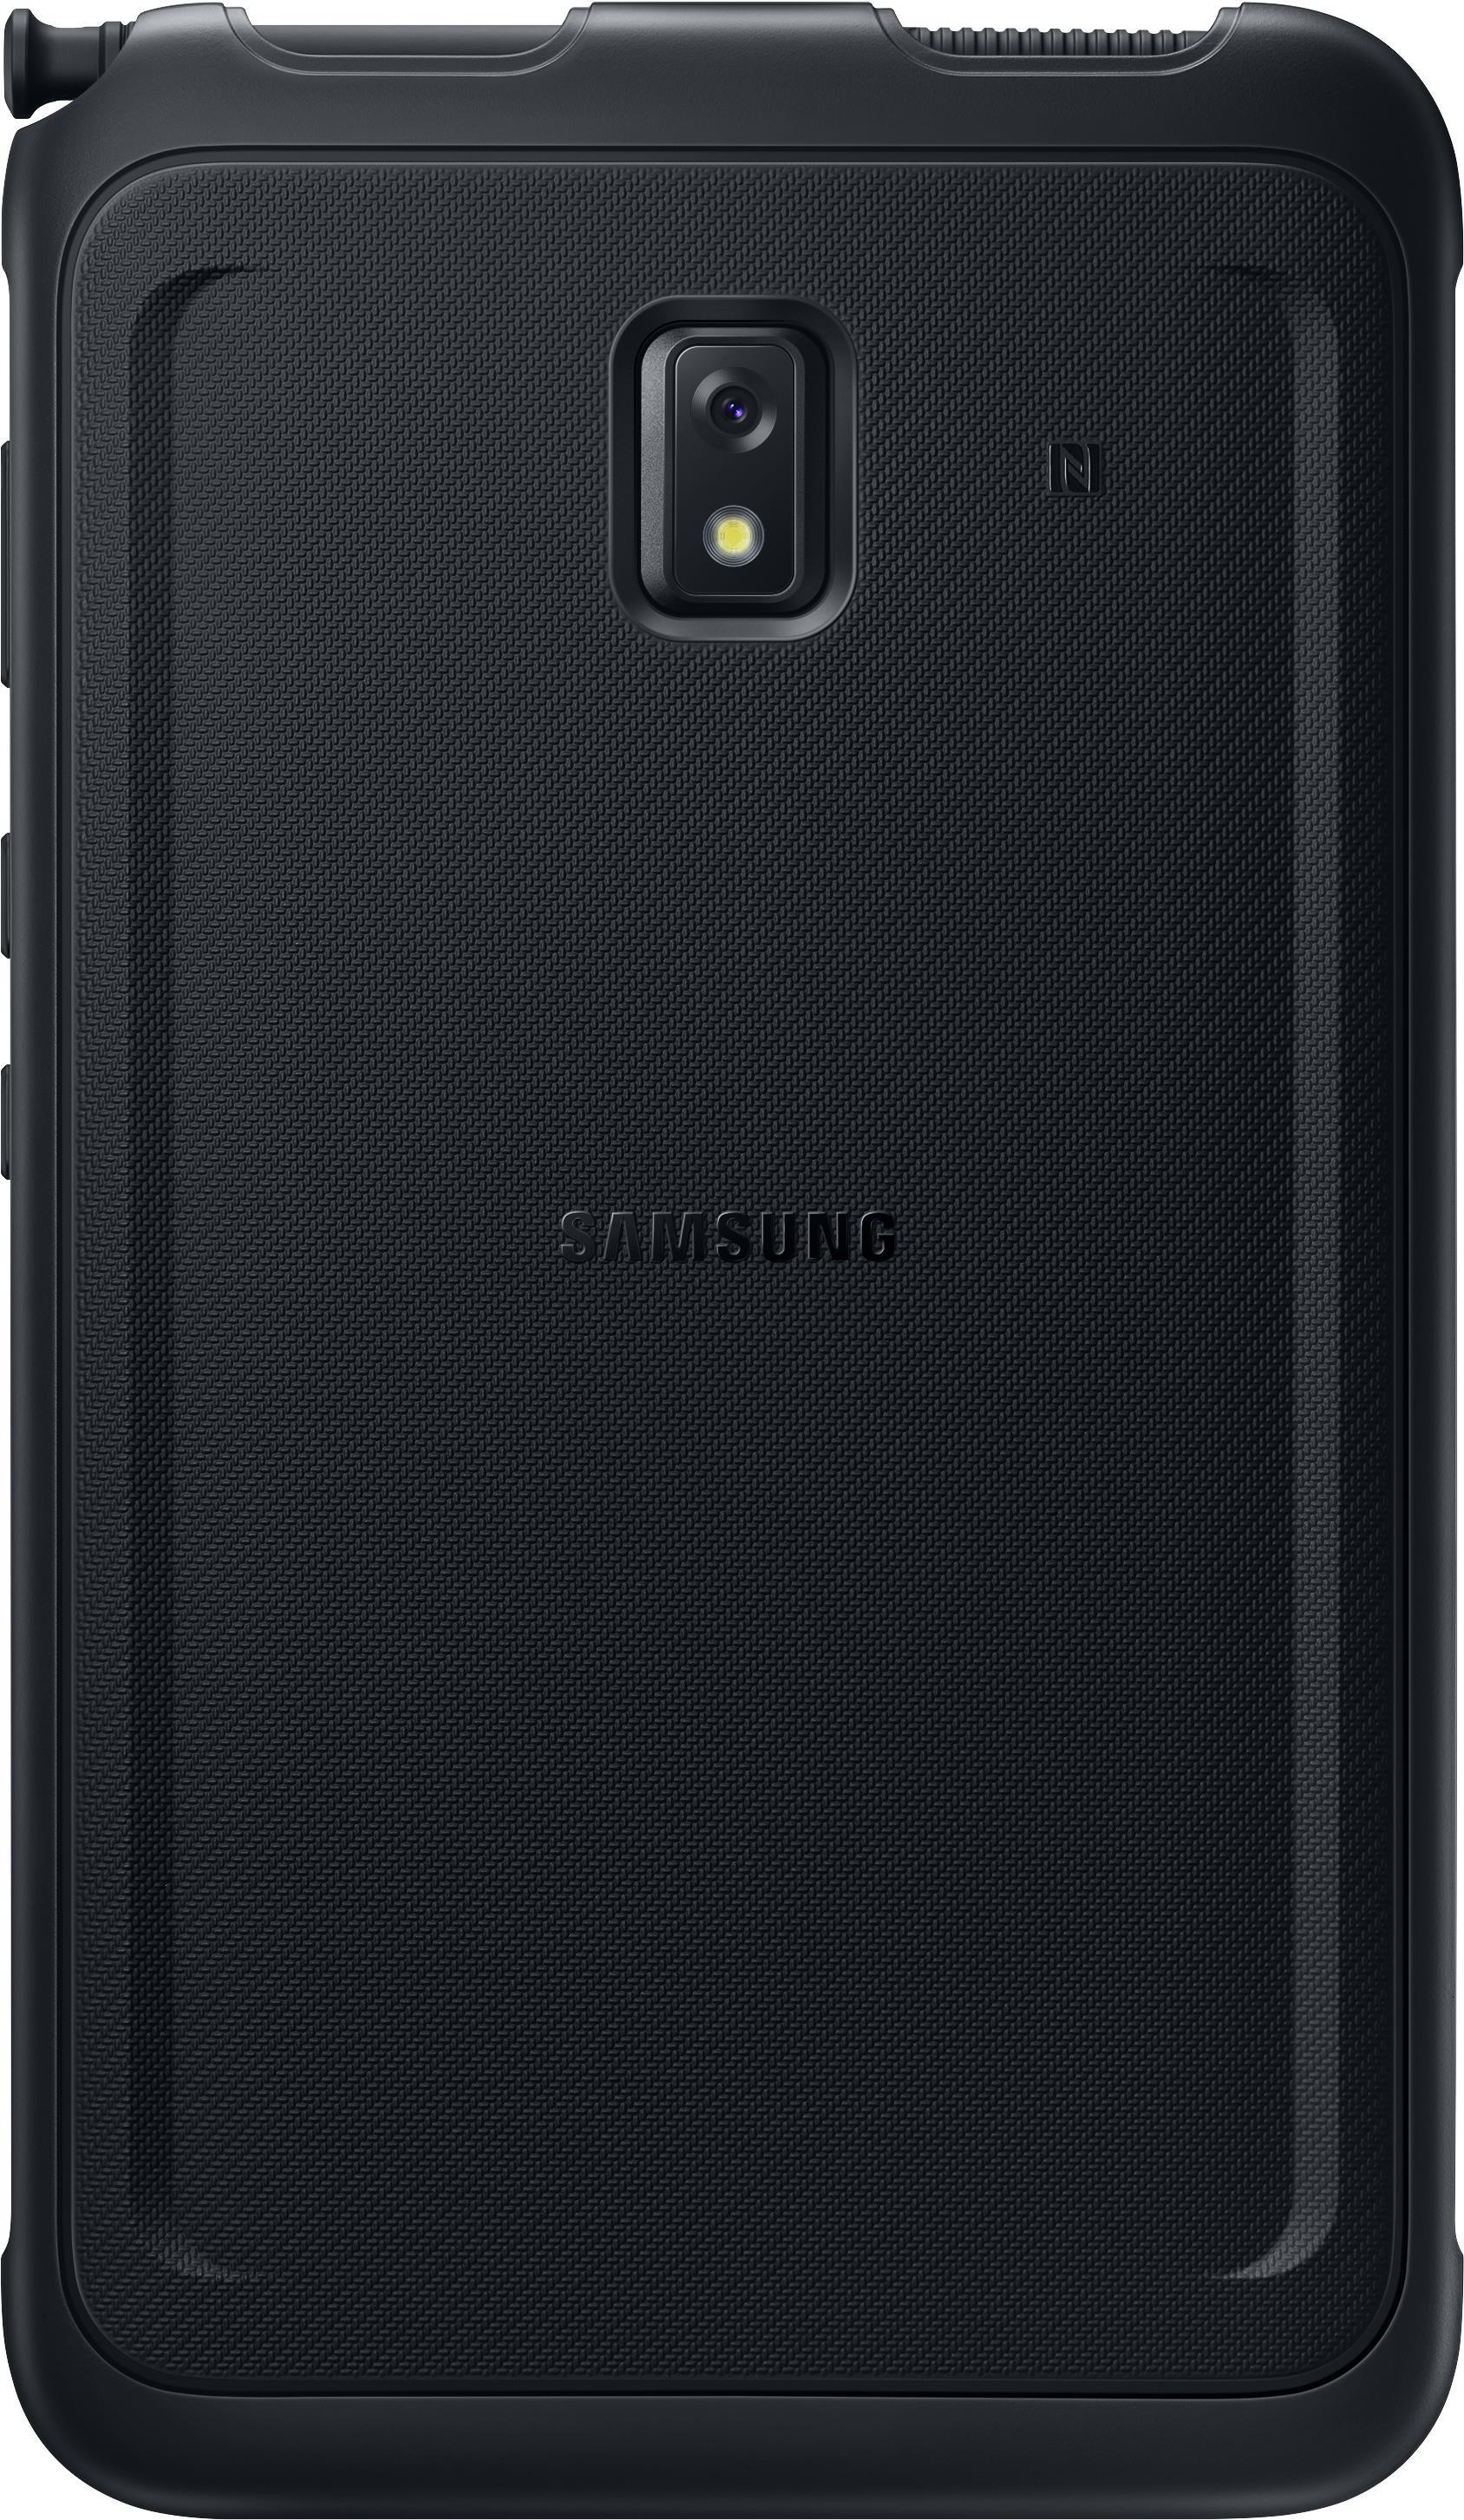 Samsung Galaxy Tab Active 3 (SM-T575NZKAEEB)